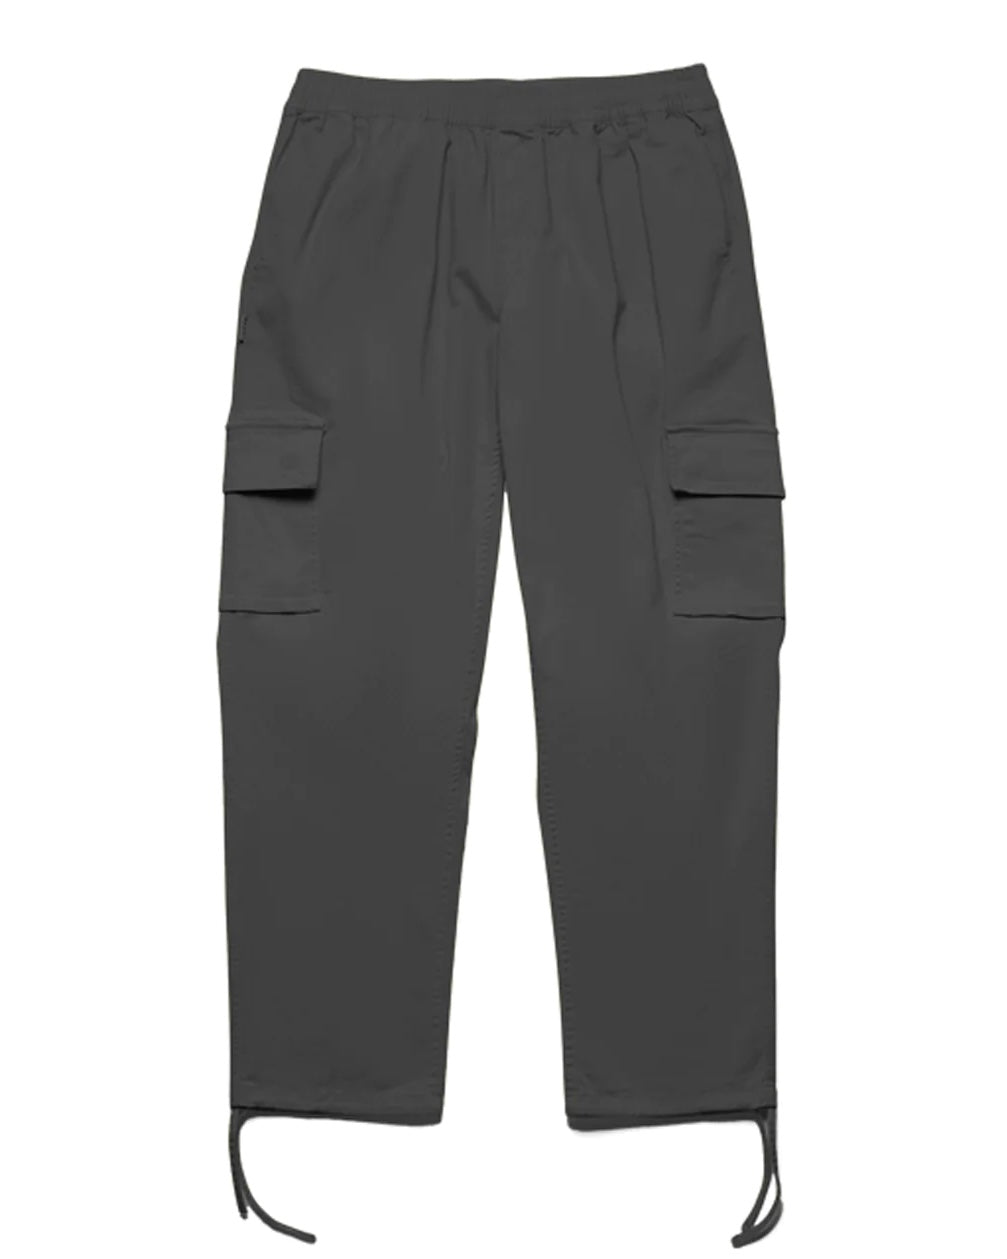 Taikan Cargo Pants in Charcoal